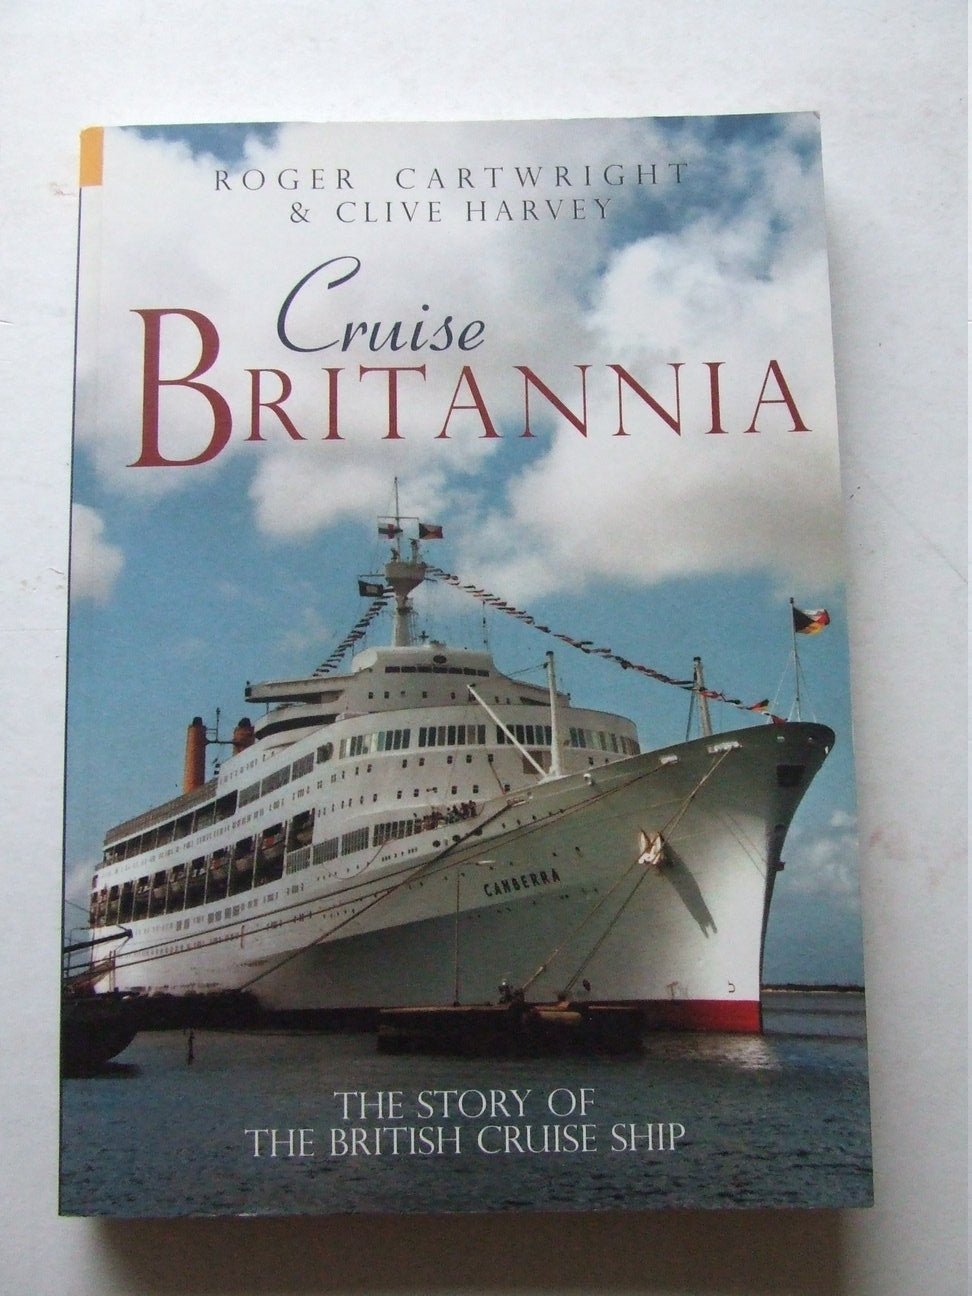 Cruise Britannia, the story of the British cruise ship